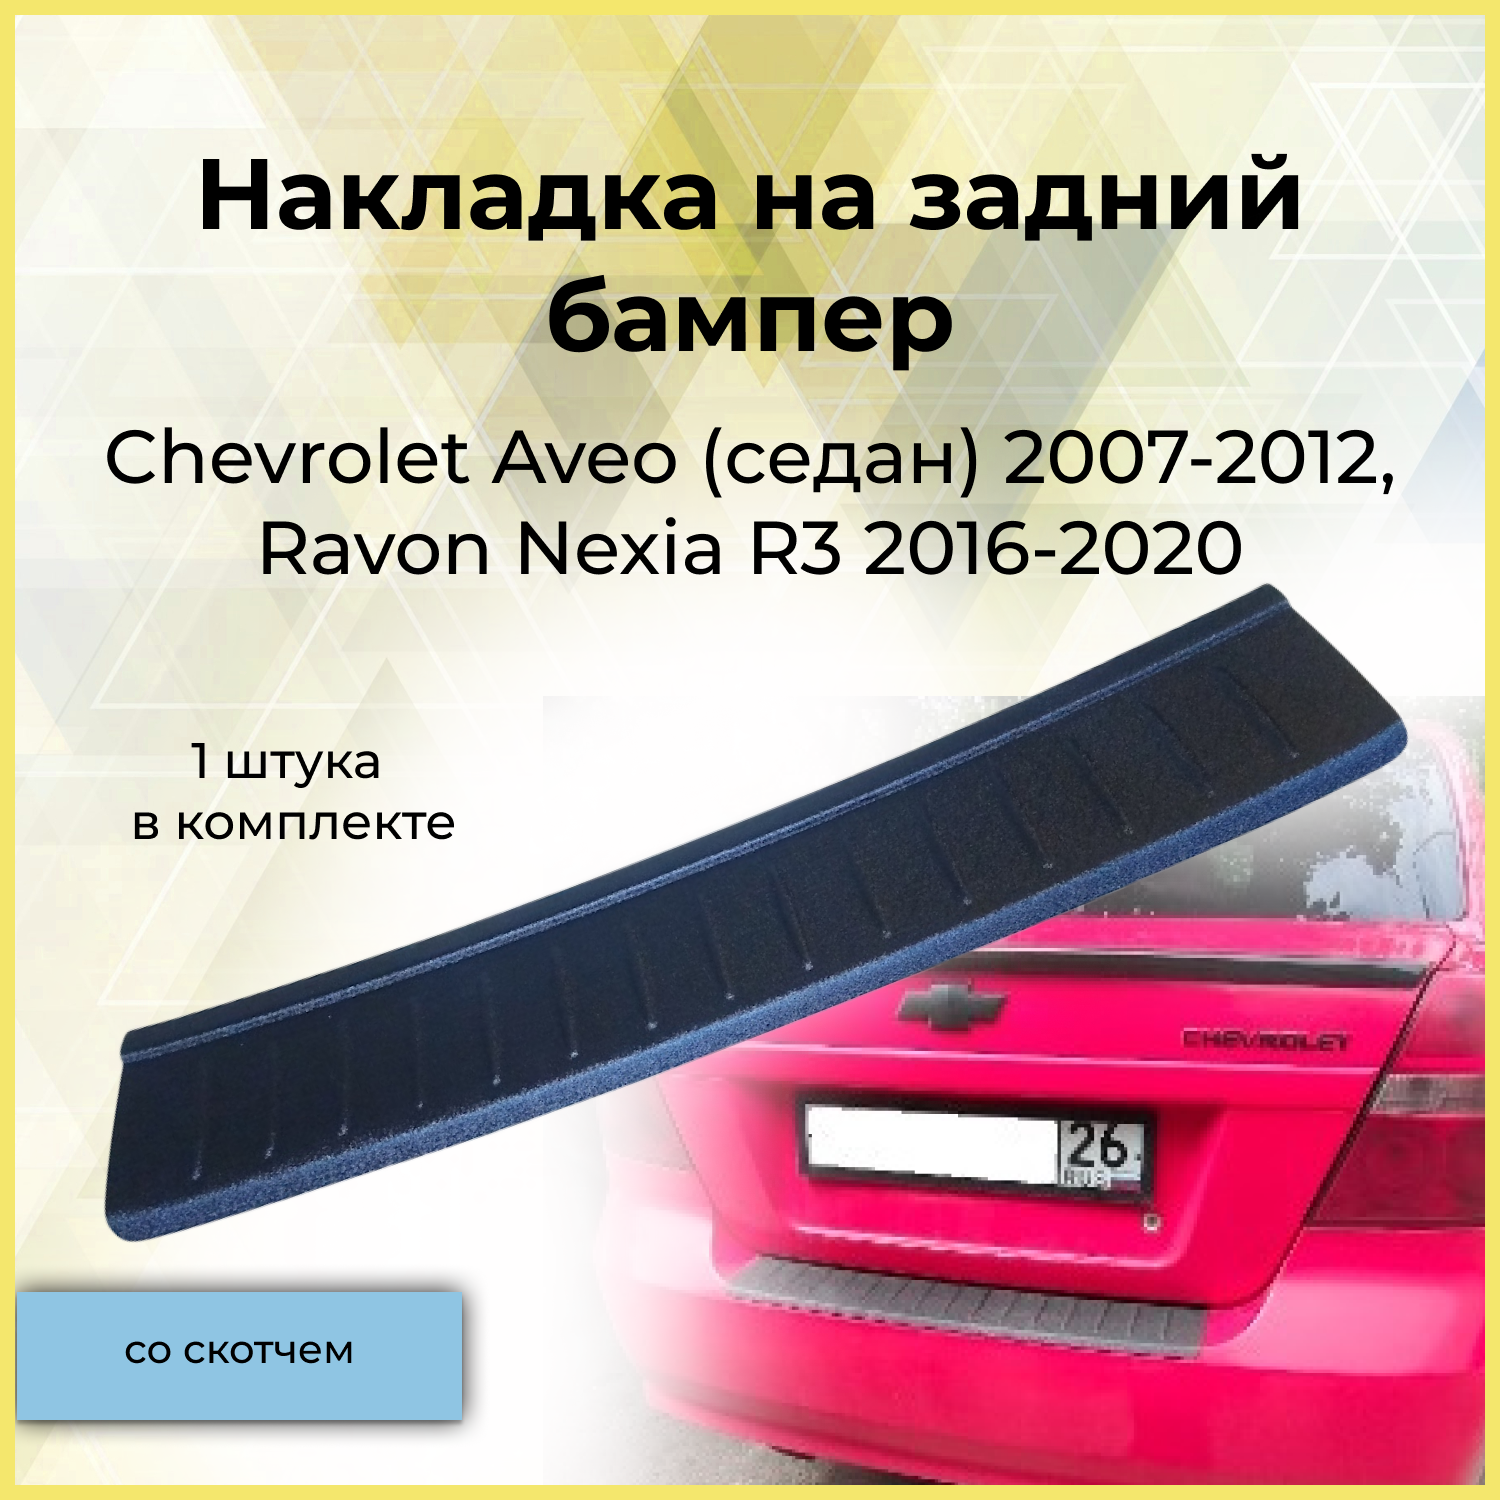 Накладка на задний бампер для Chevrolet Aveo (седан) 2007-2012 Ravon Nexia R3